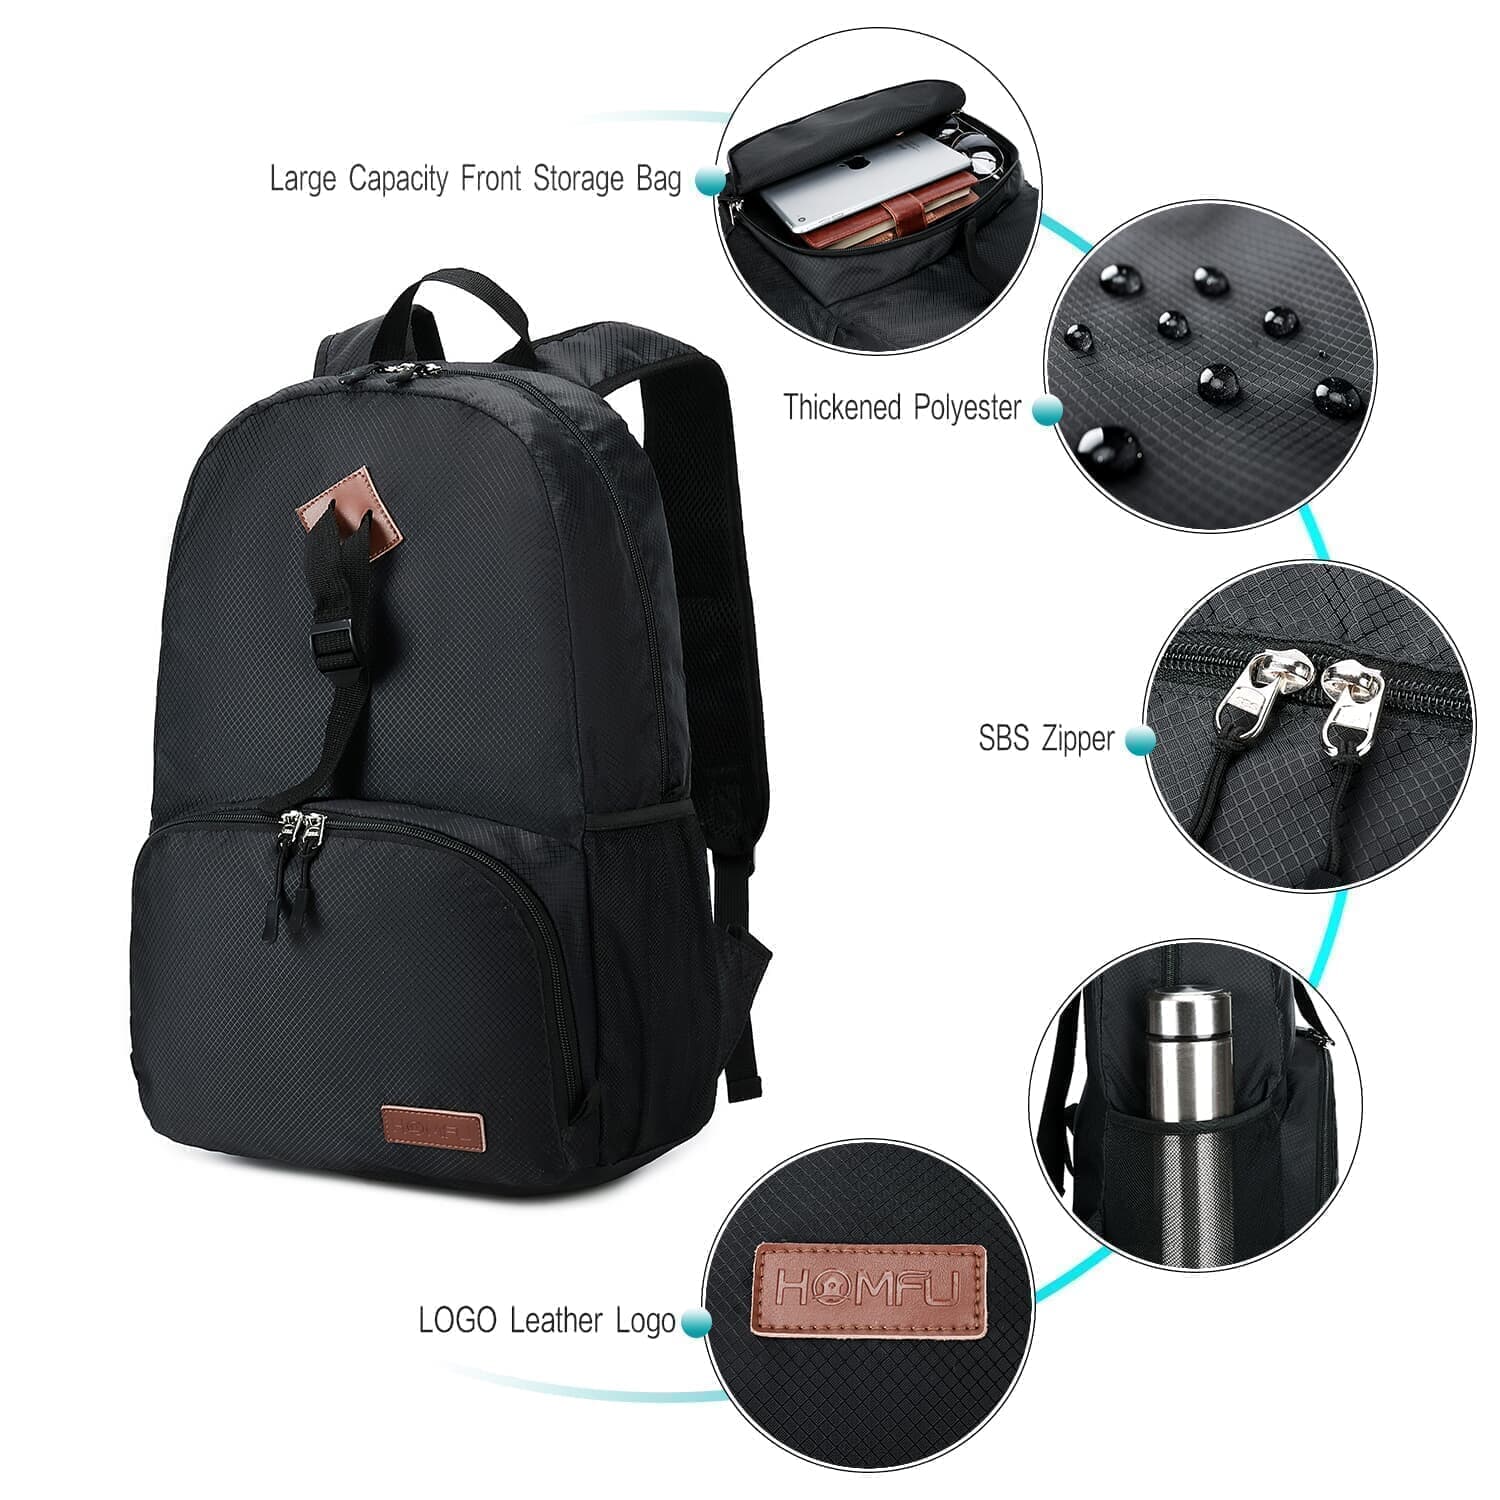 Homfu Foldable Backpack For Travel Packable Daypack For Hiking Camping Waterproof Lightweight Bag Black  